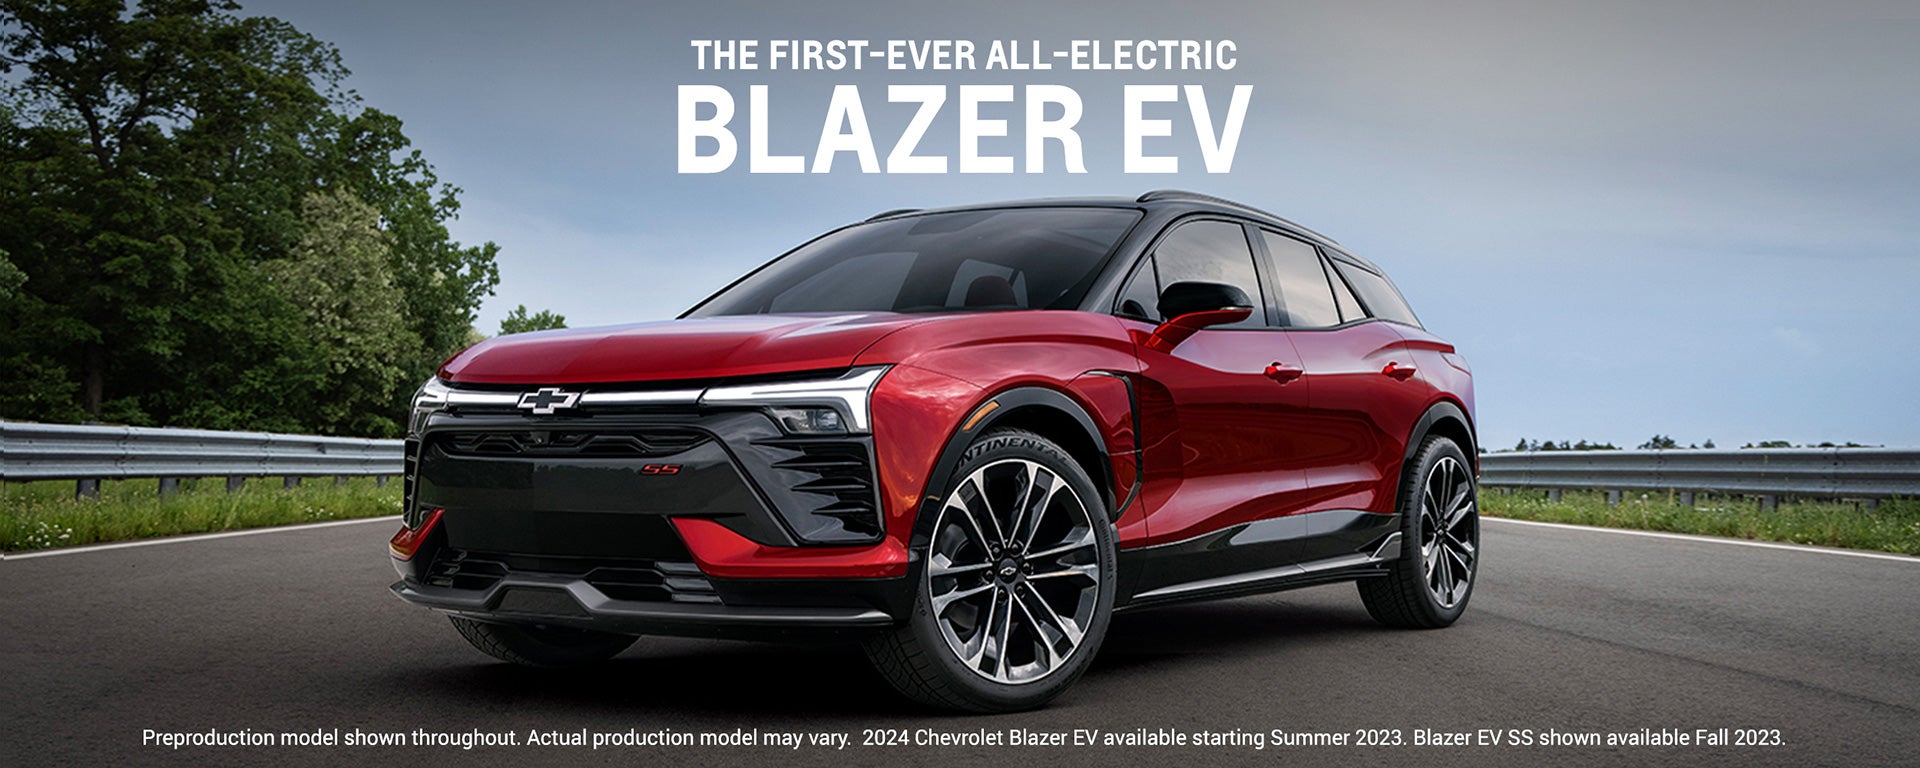 The First-ever All-electric Blazer EV | Waldorf Chevrolet-Cadillac in Waldorf MD